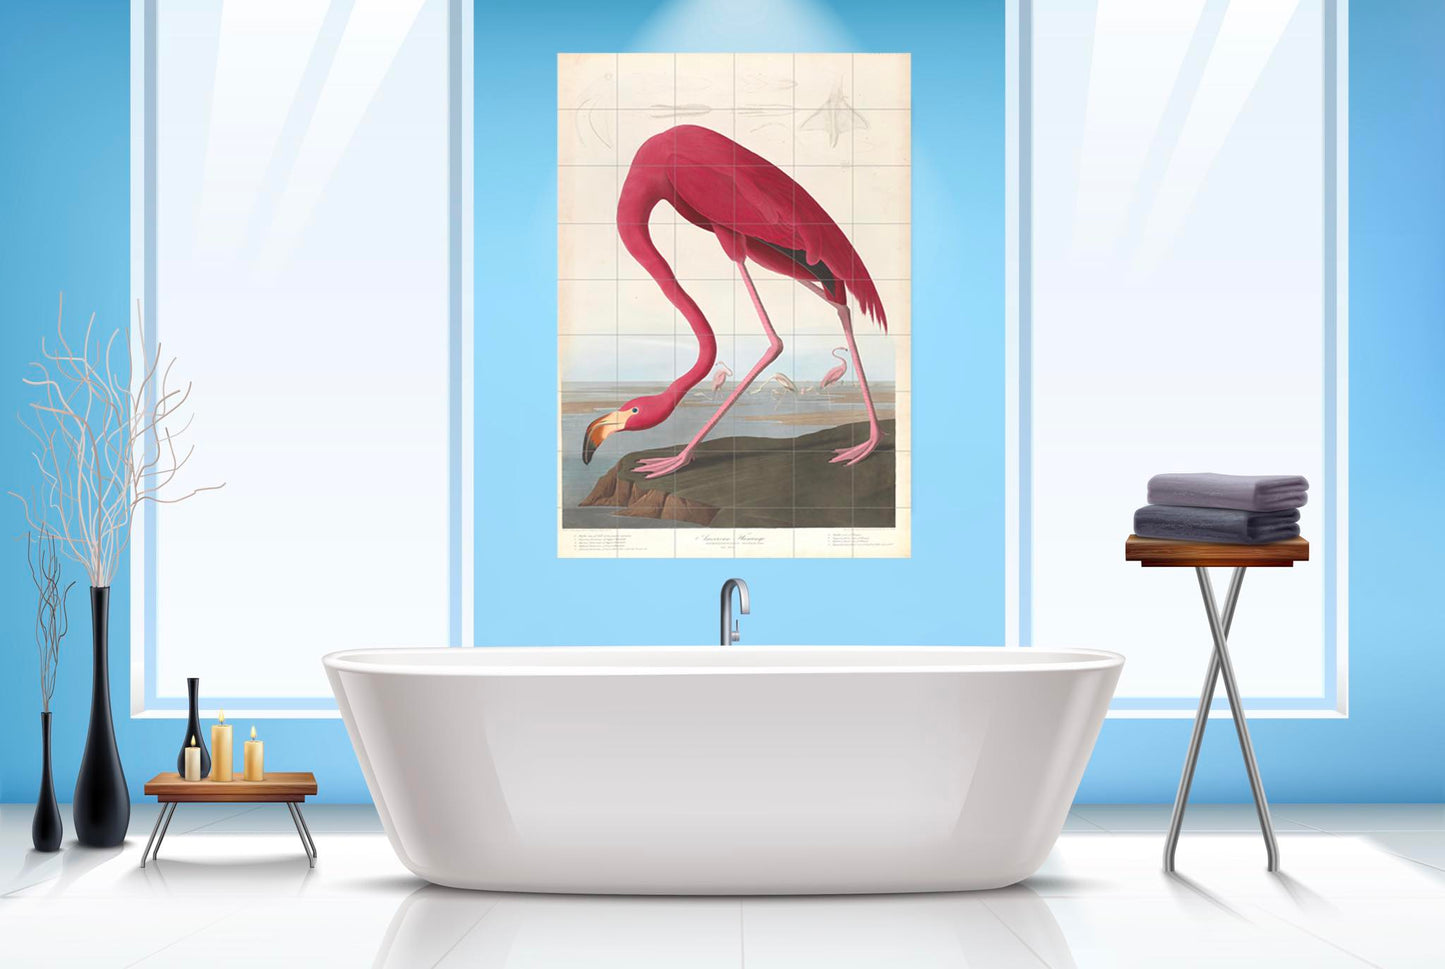 Tile Mural/Mosaic Ceramic Panel of Pink Flamingo - John James Auburn - Bird Print - Bird Art - Vintage Birds Print - Bird Wall Art - Auburn